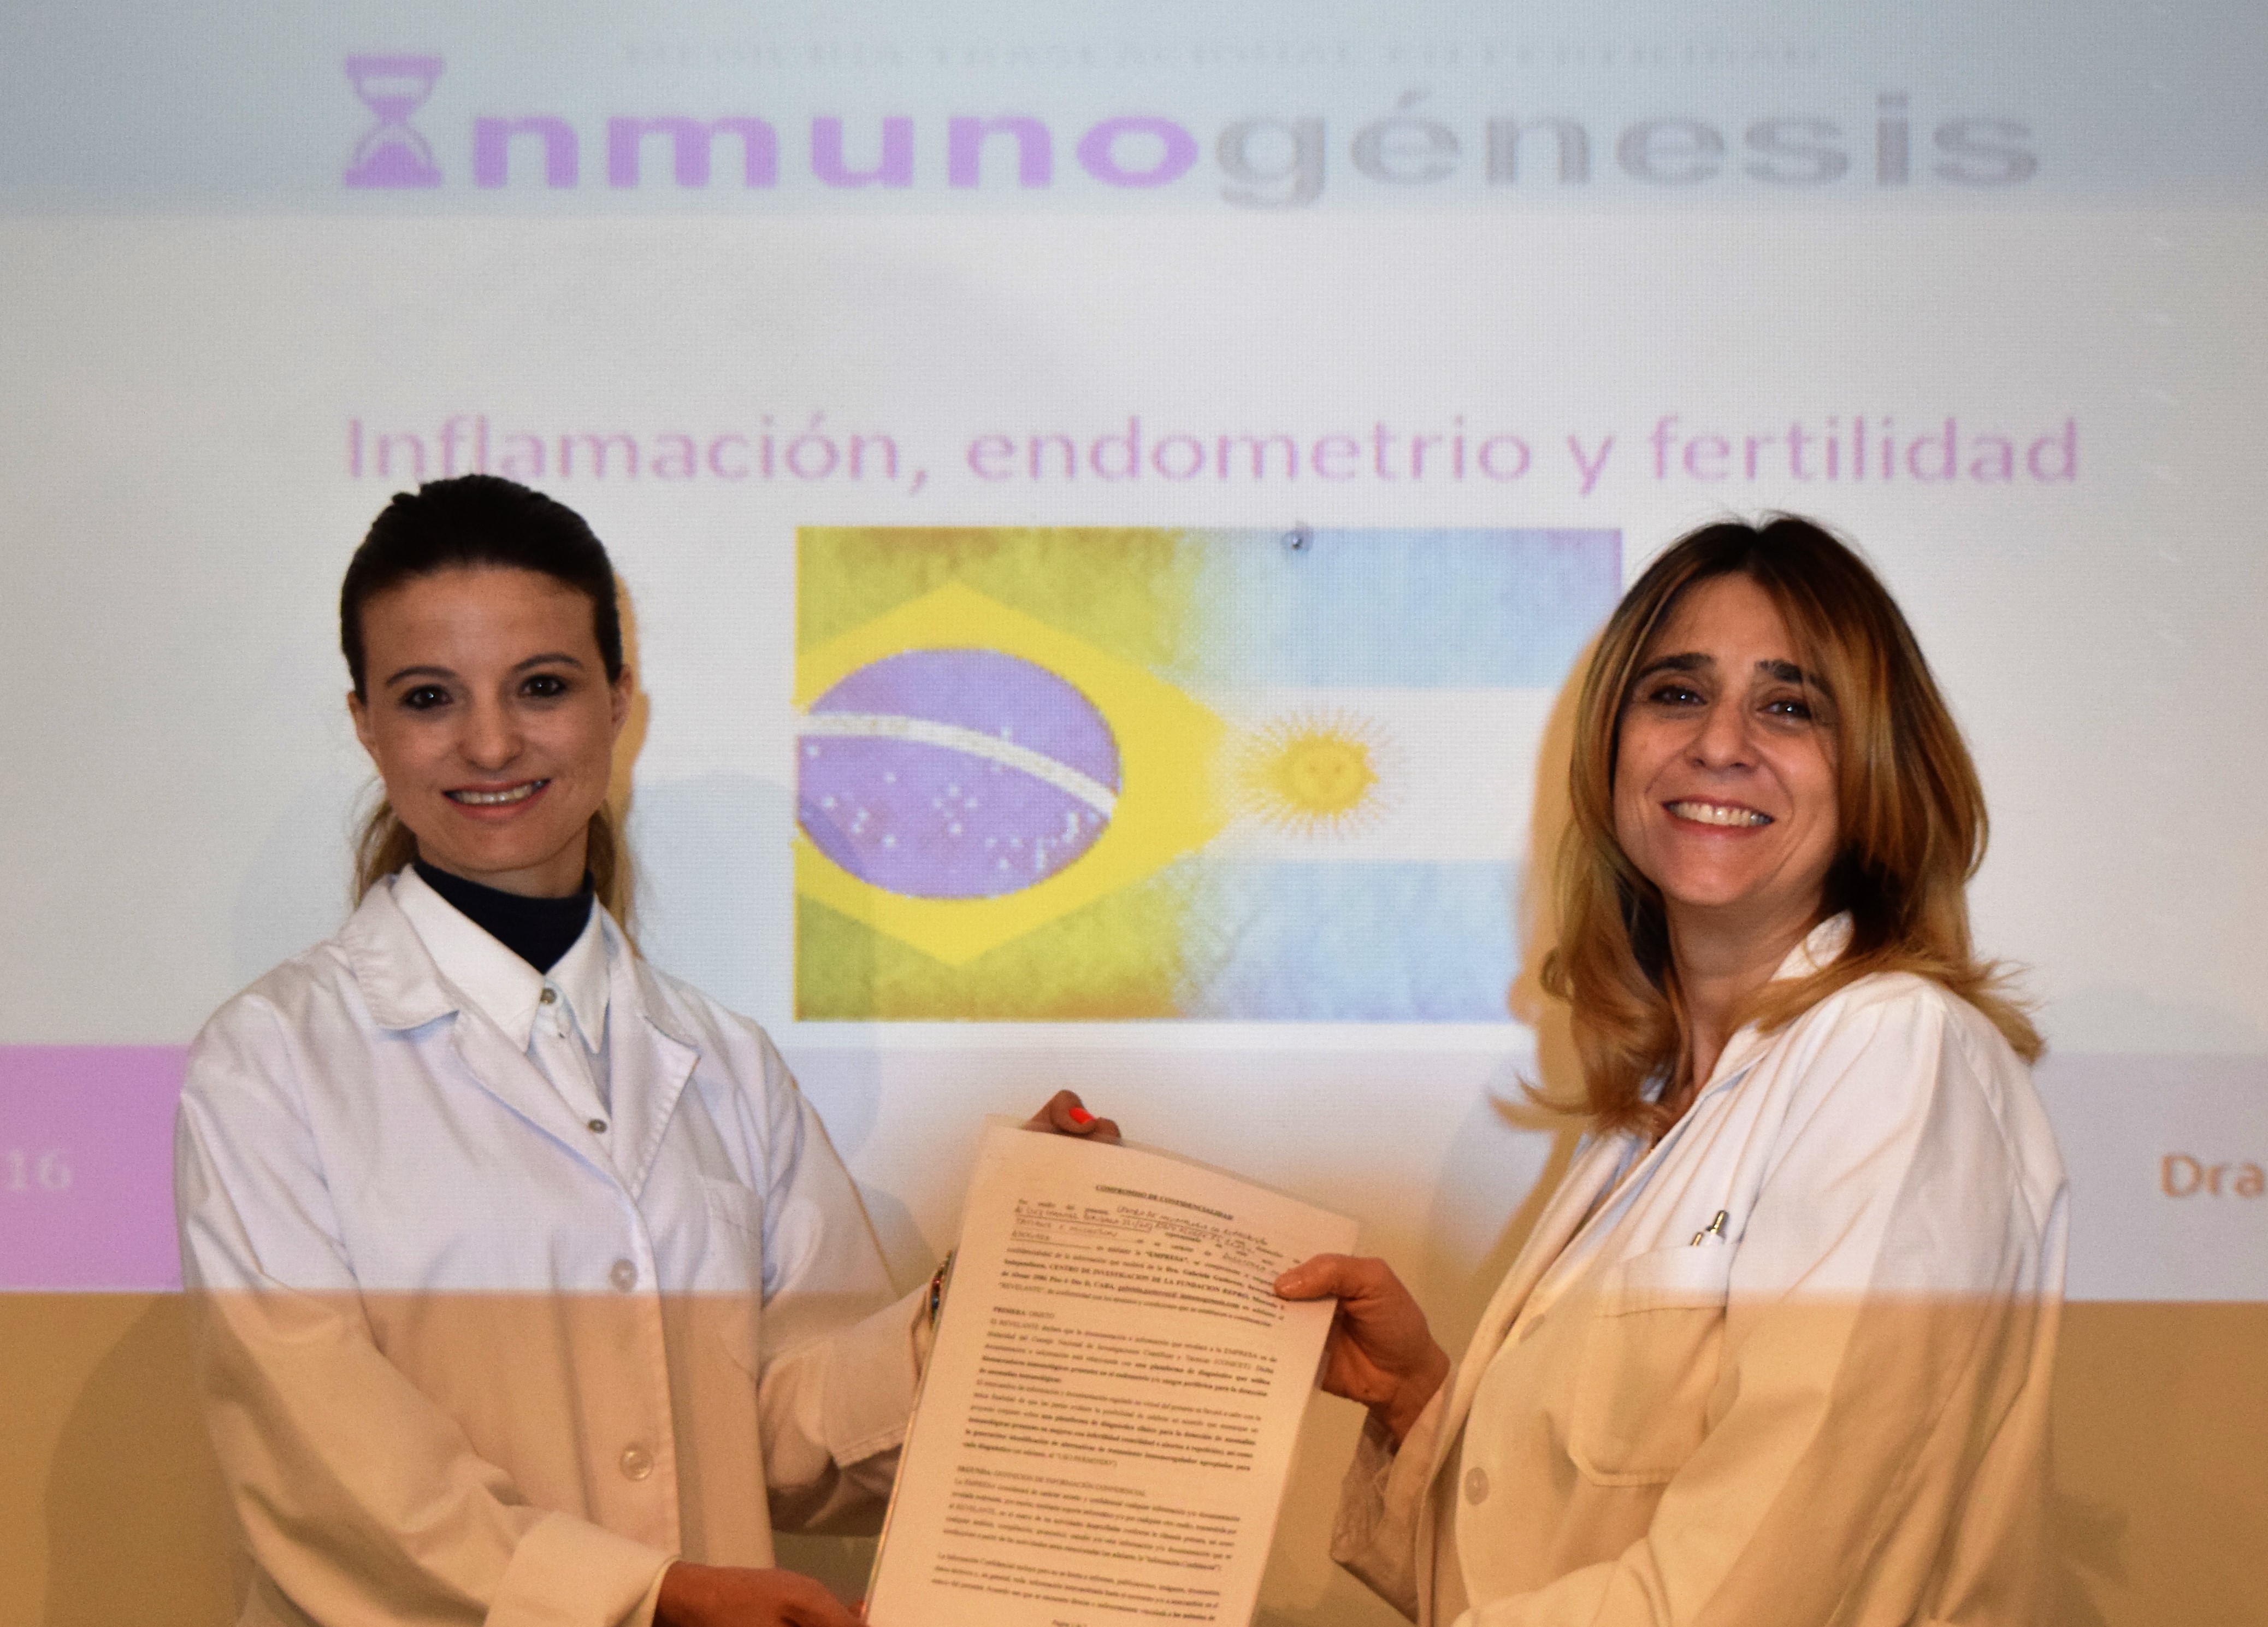 inmunogenesisbr